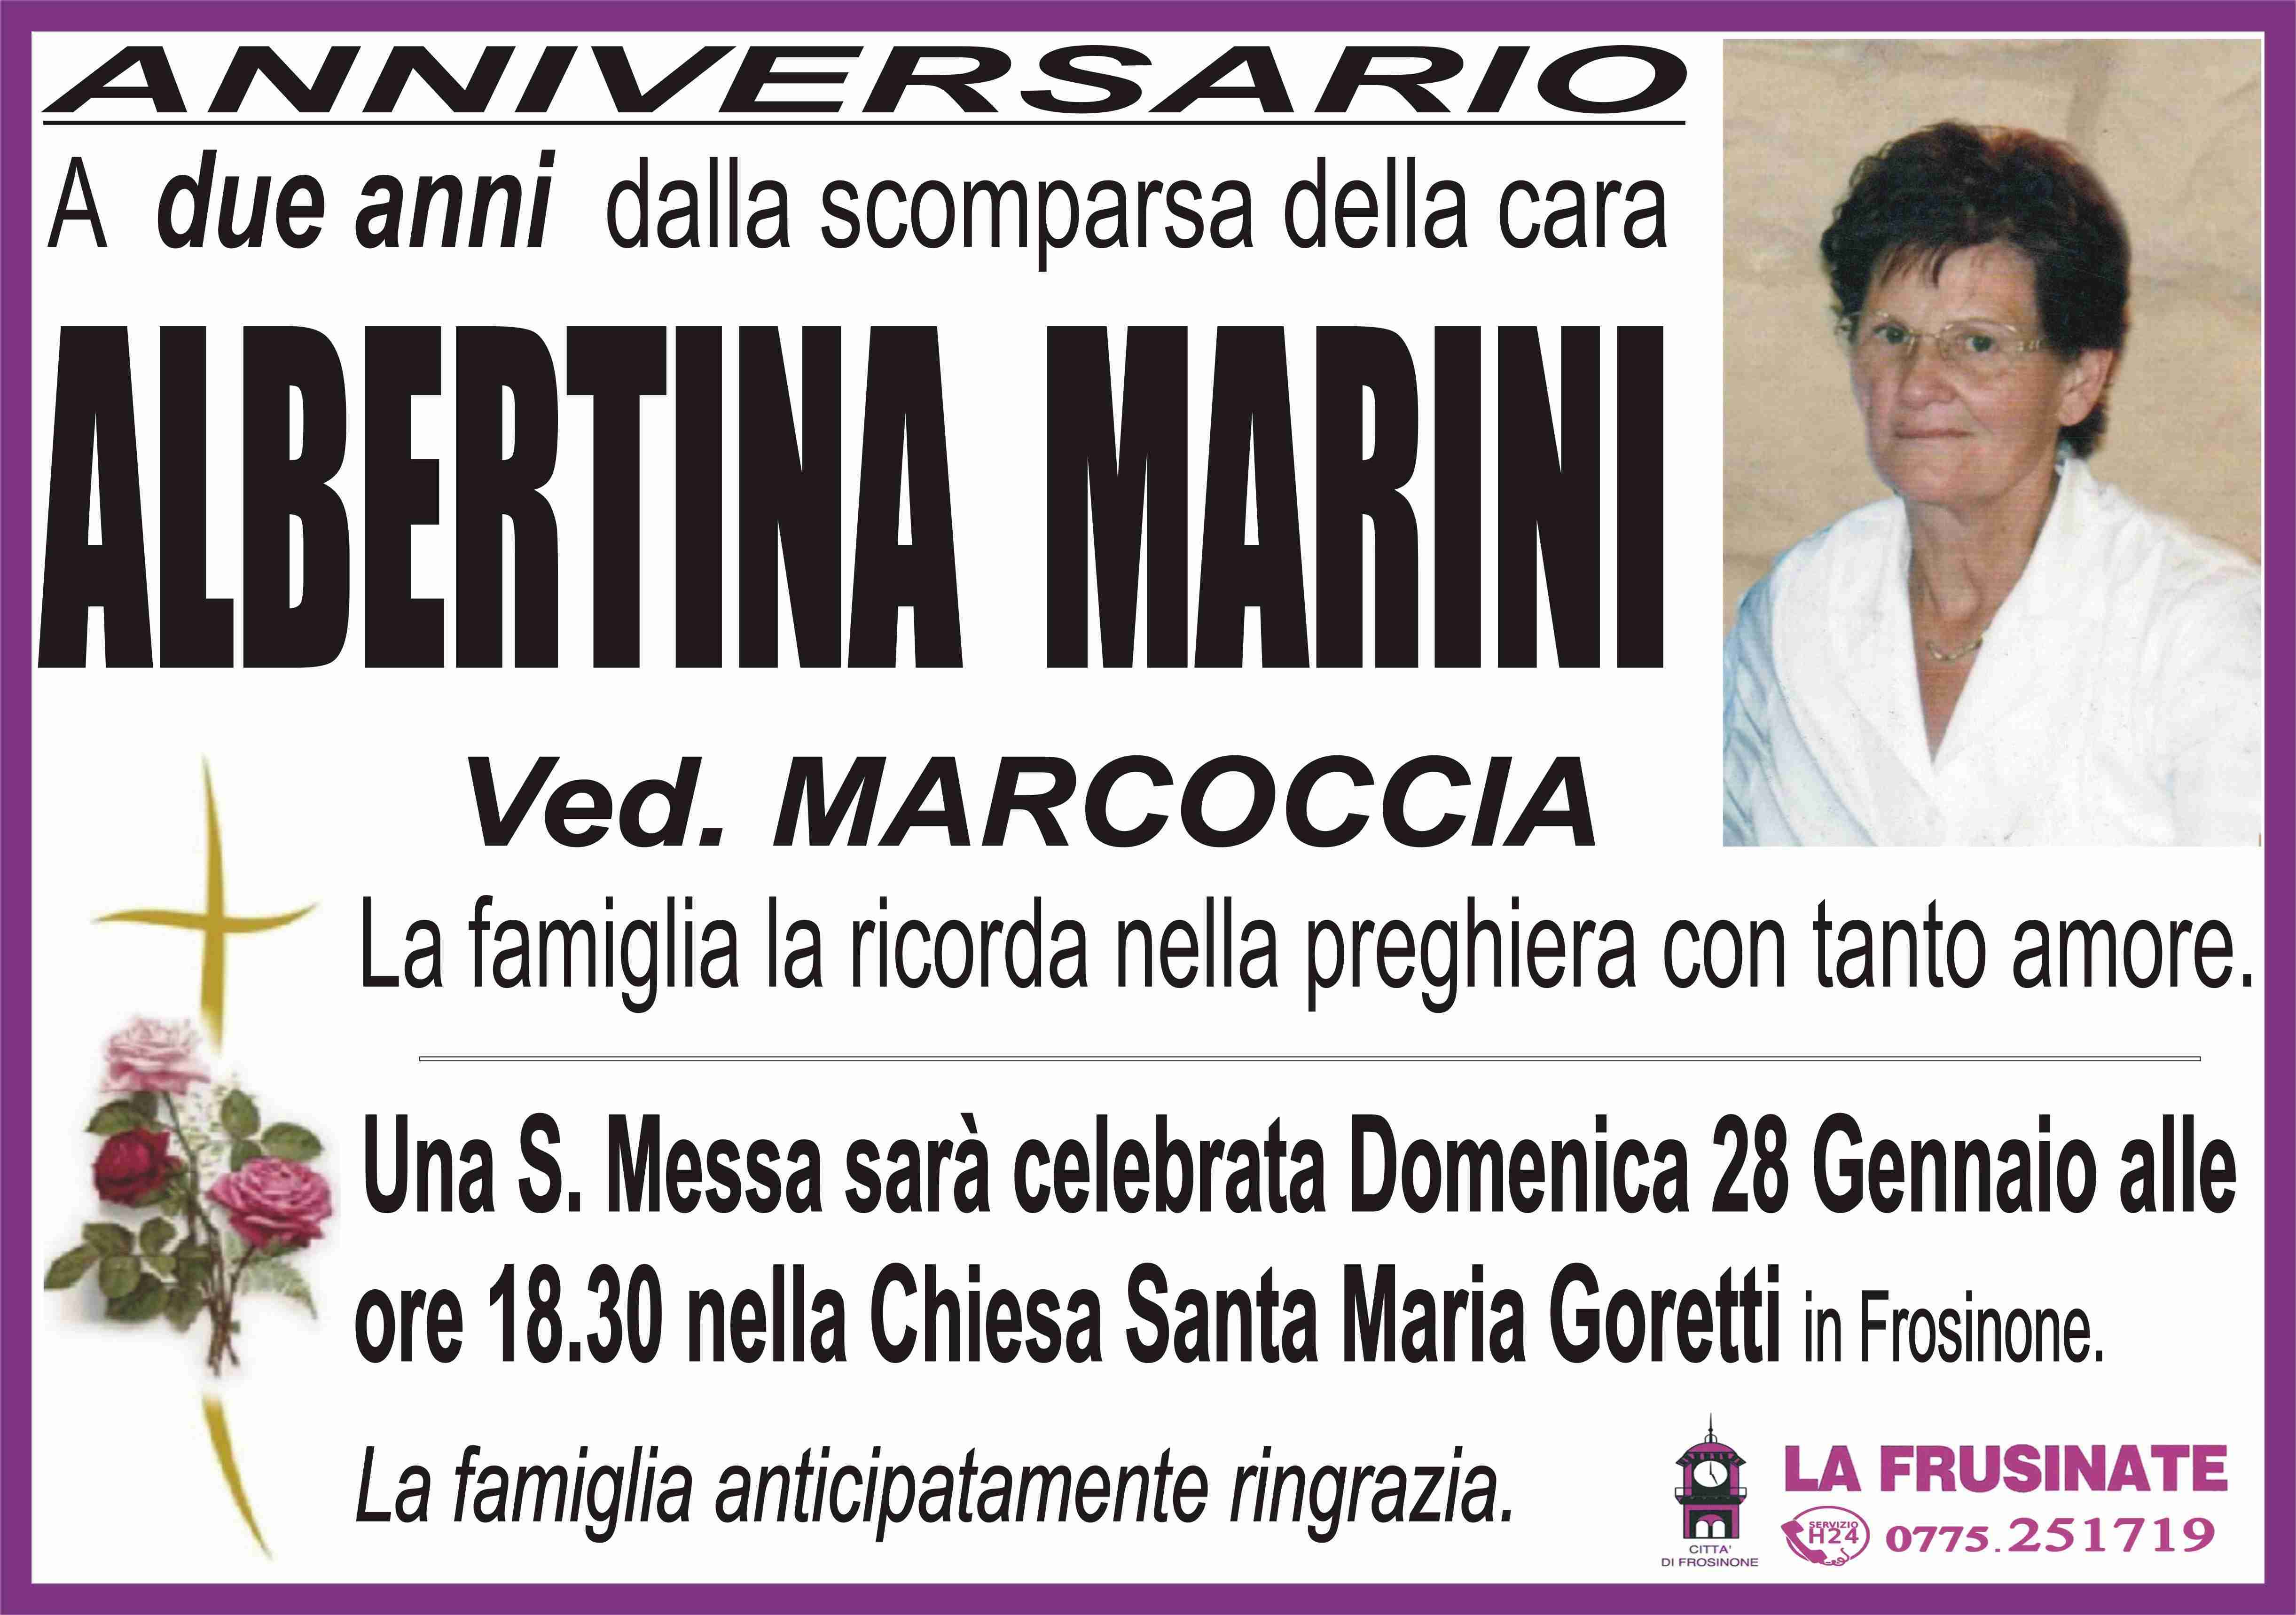 Albertina Marini